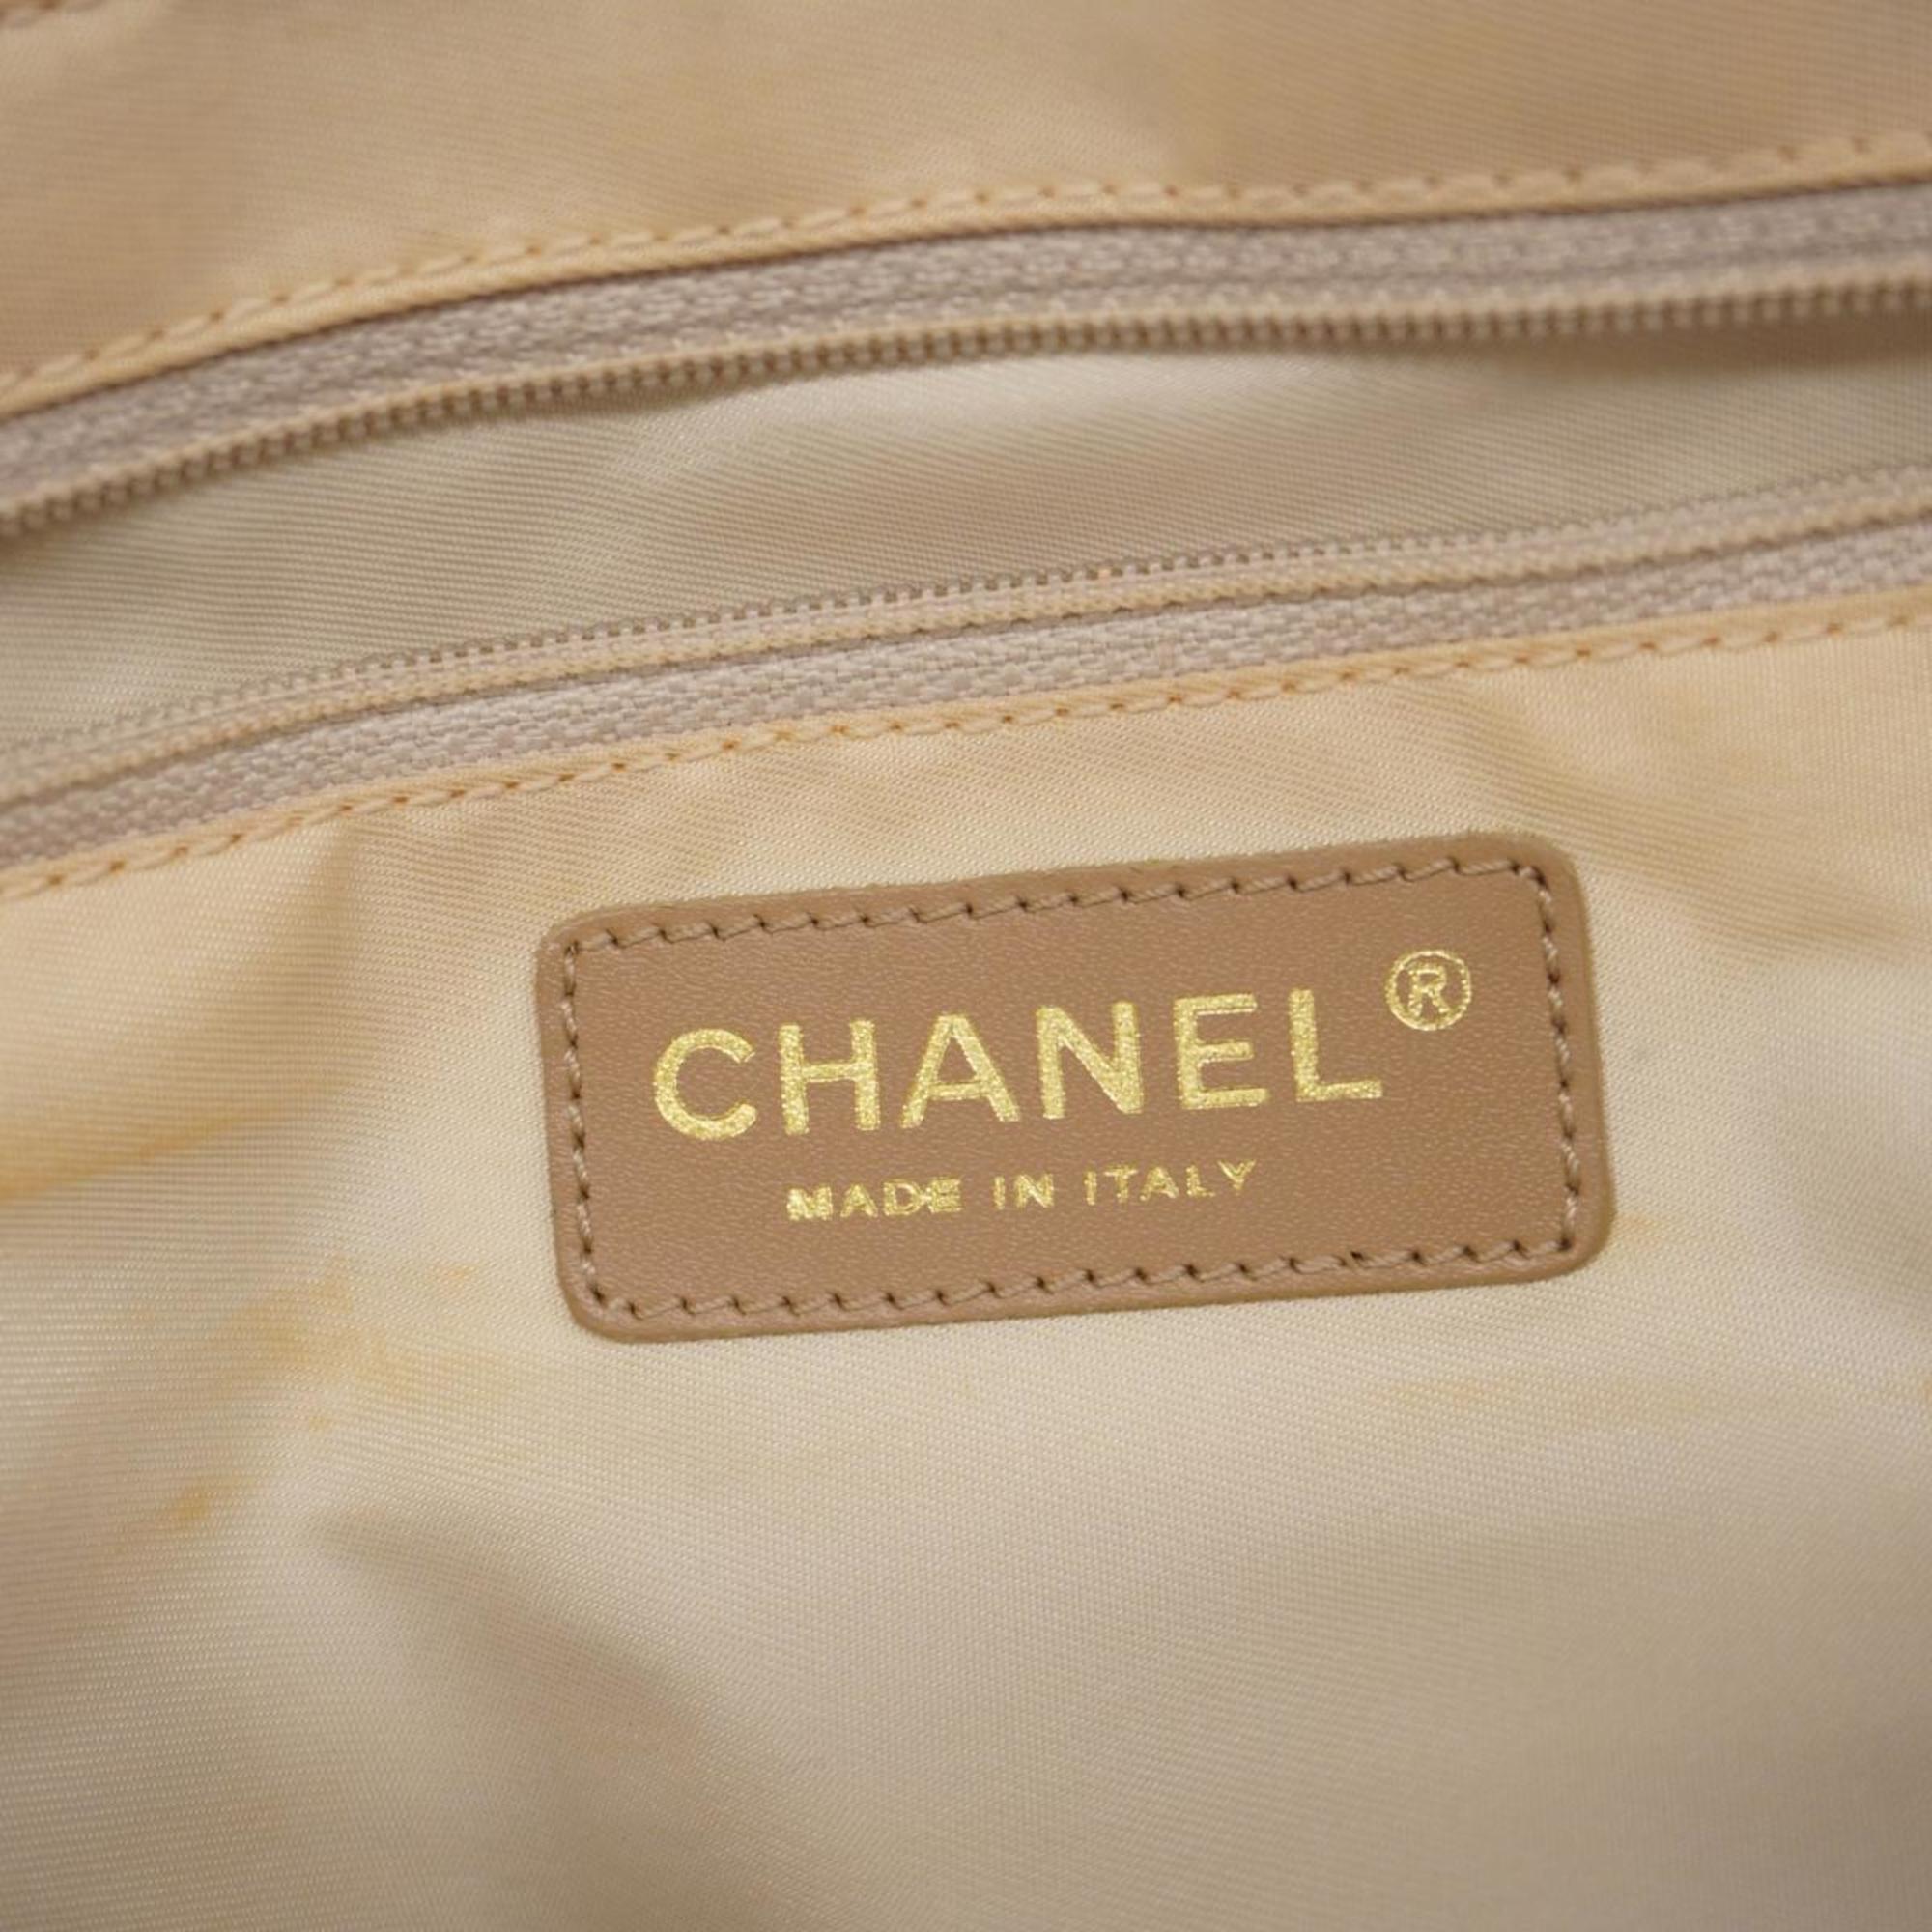 Chanel Tote Bag New Travel Nylon Beige Champagne Women's